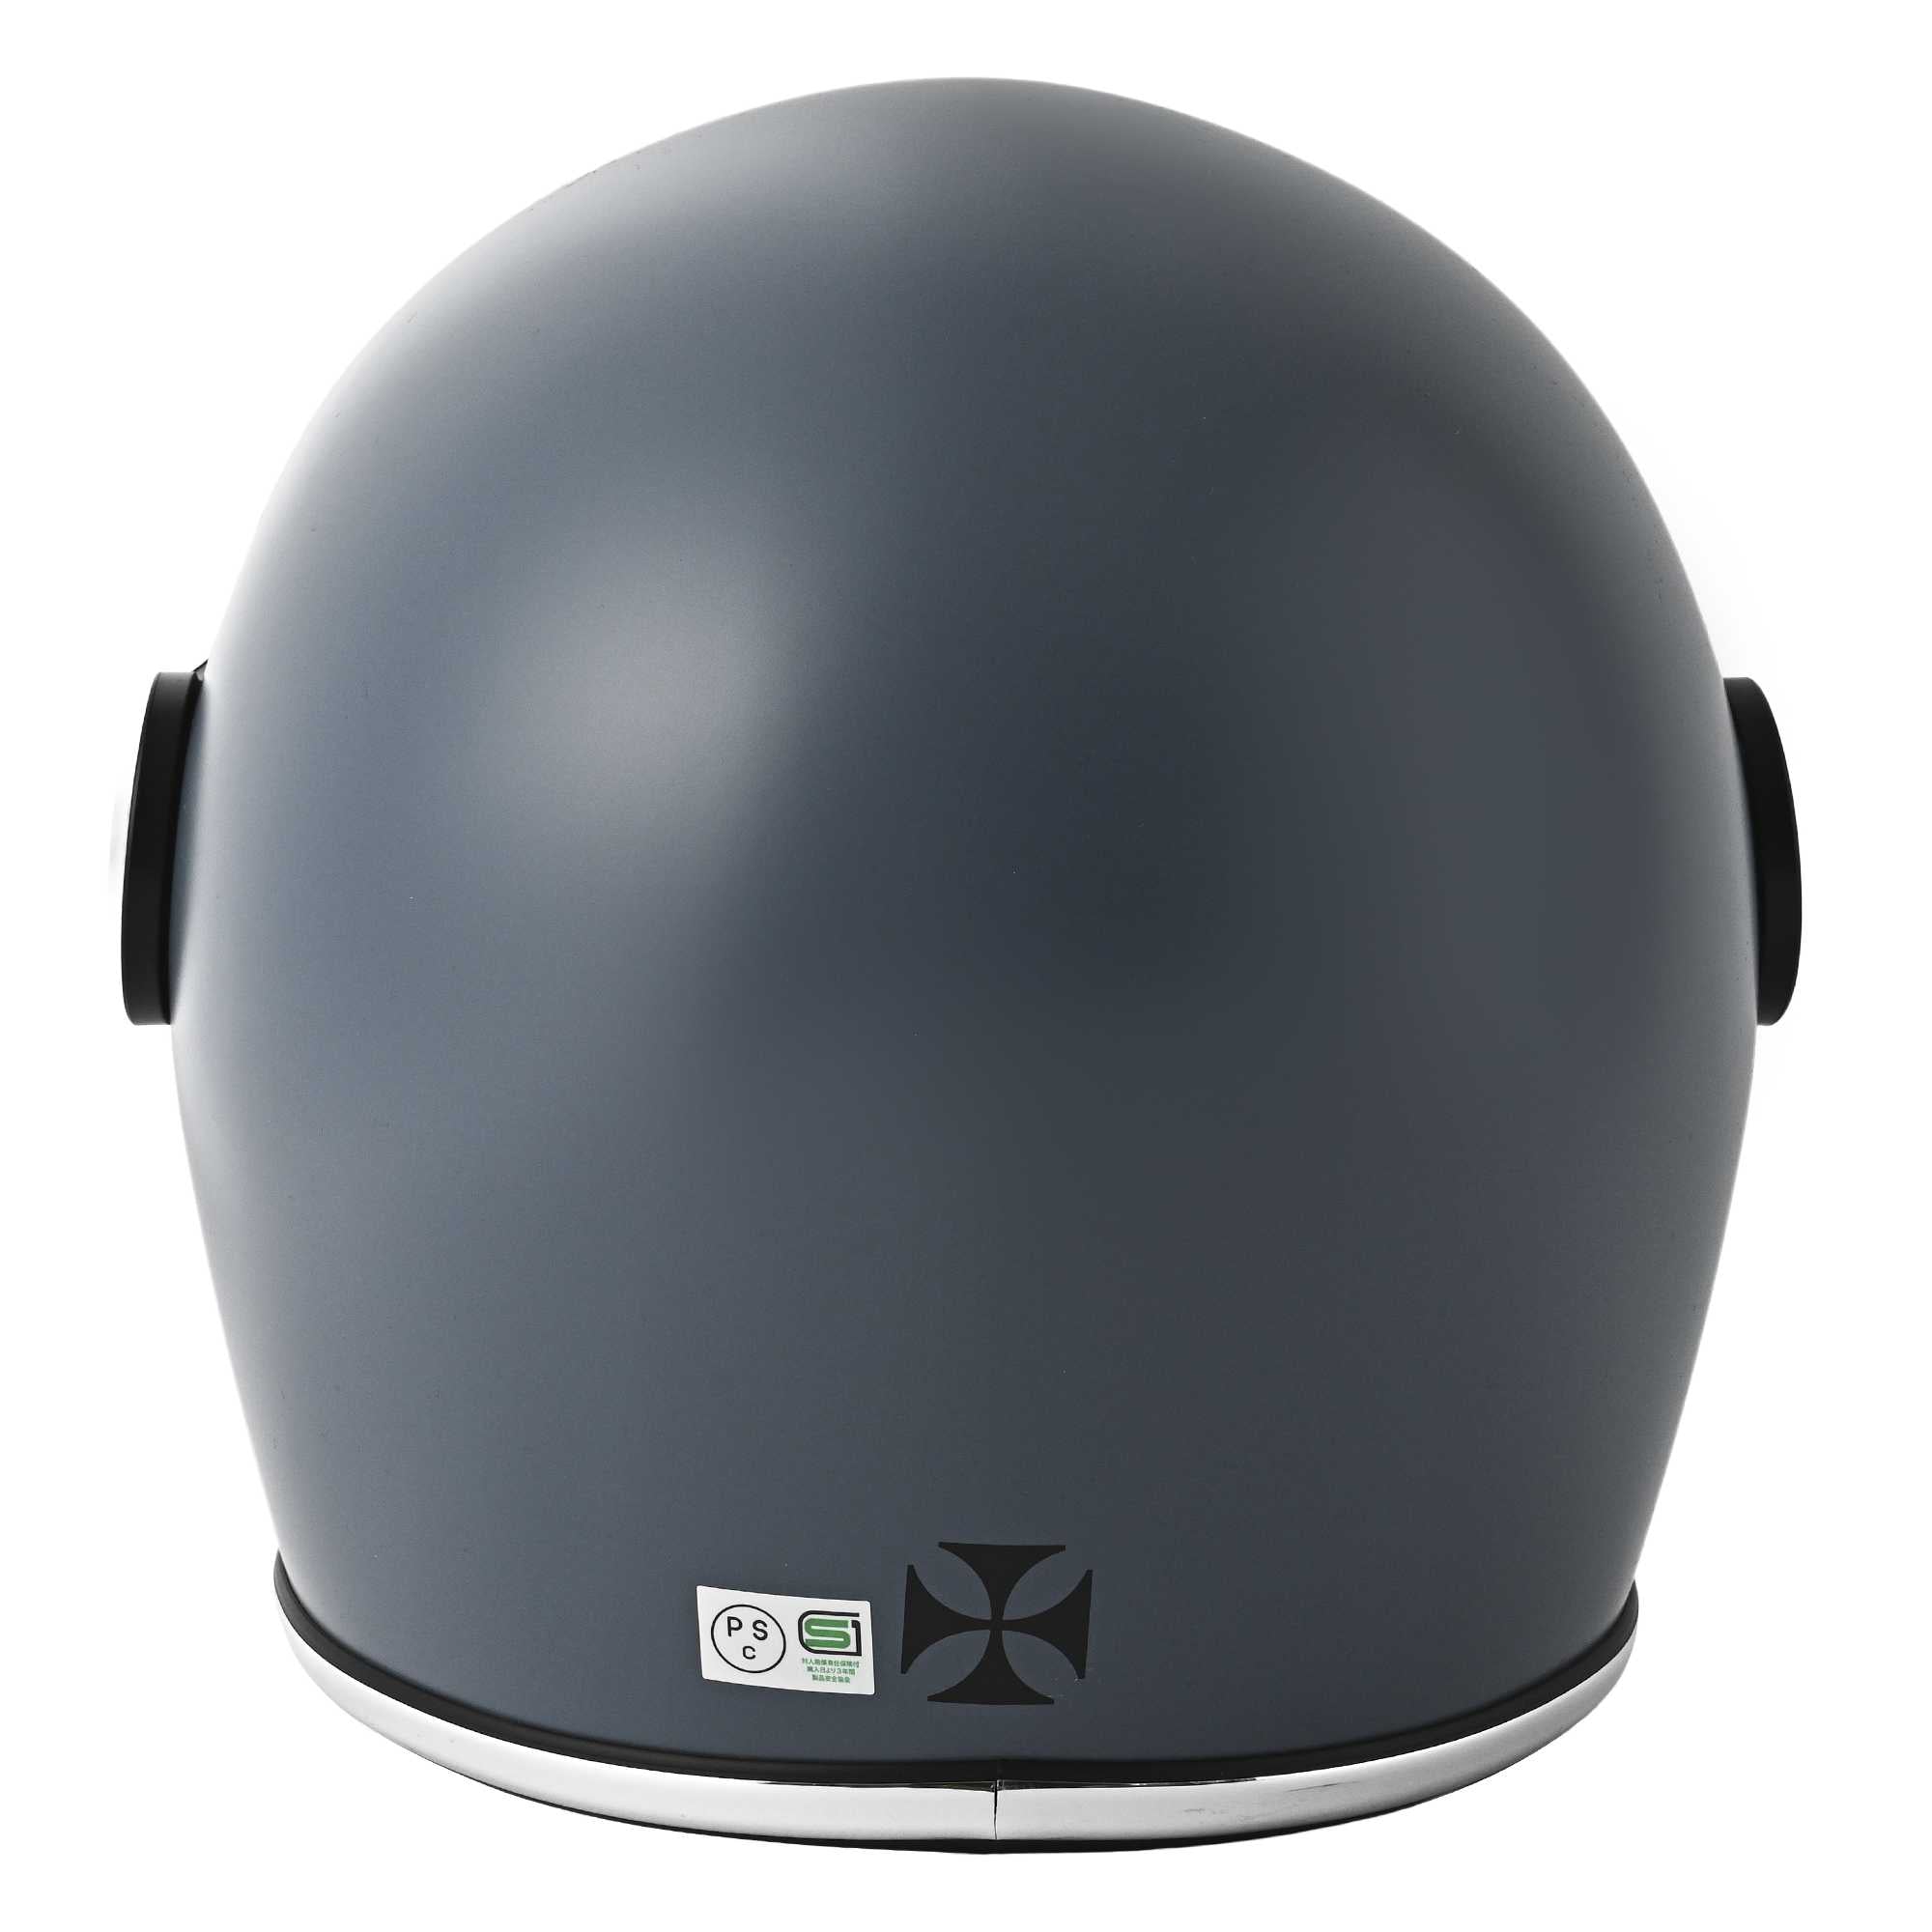 RIDEZ X HELMET GRAY Full Face Motorcycle Helmet 